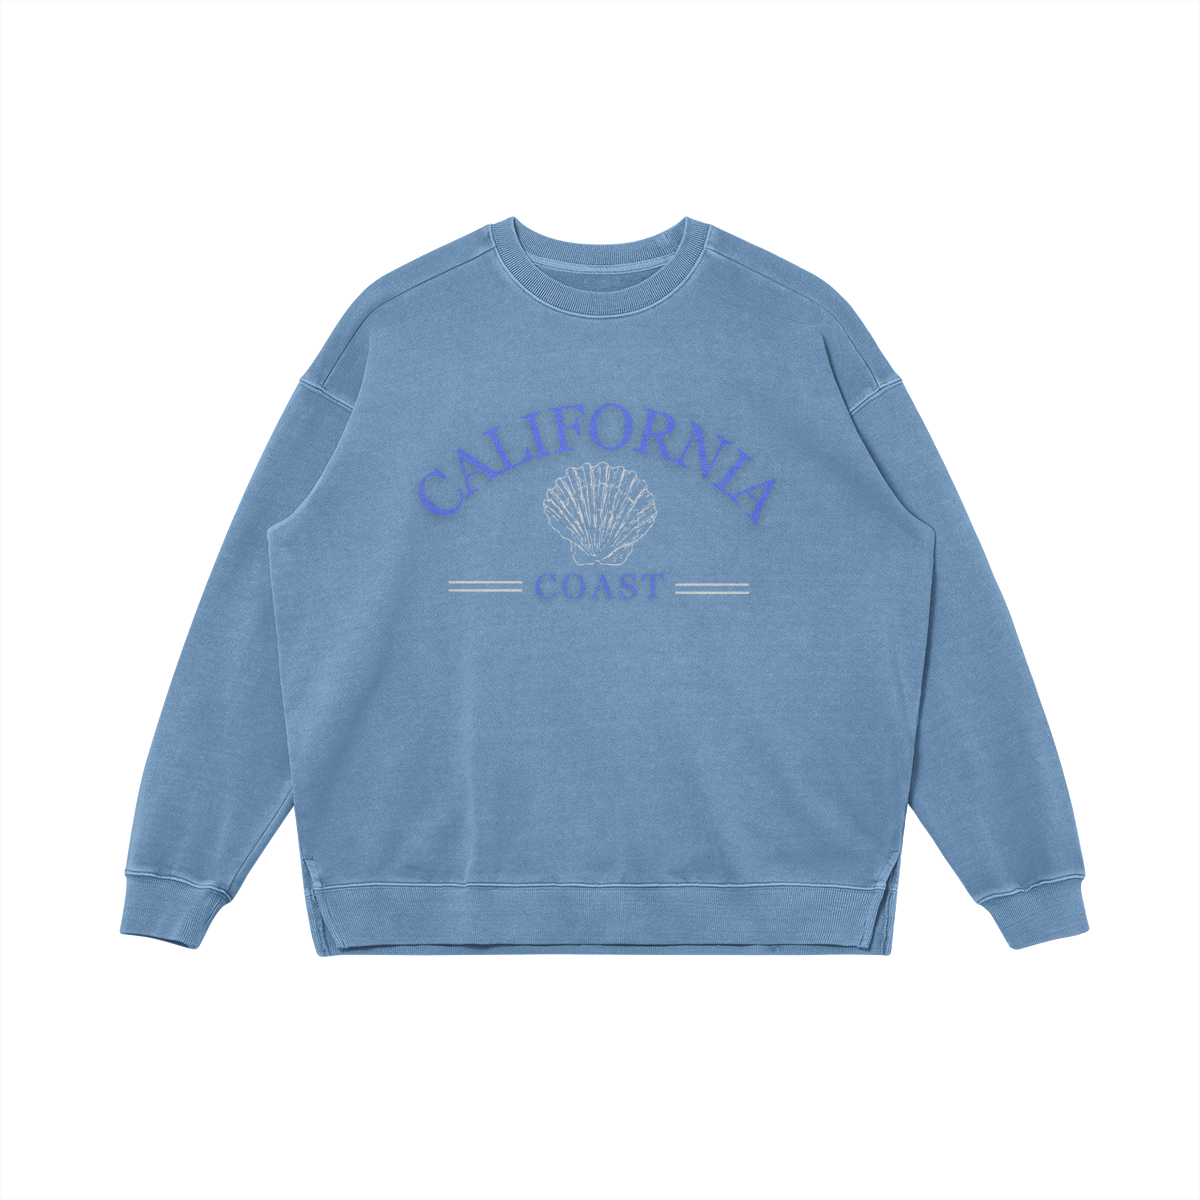 California Coast Heavyweight Pullover